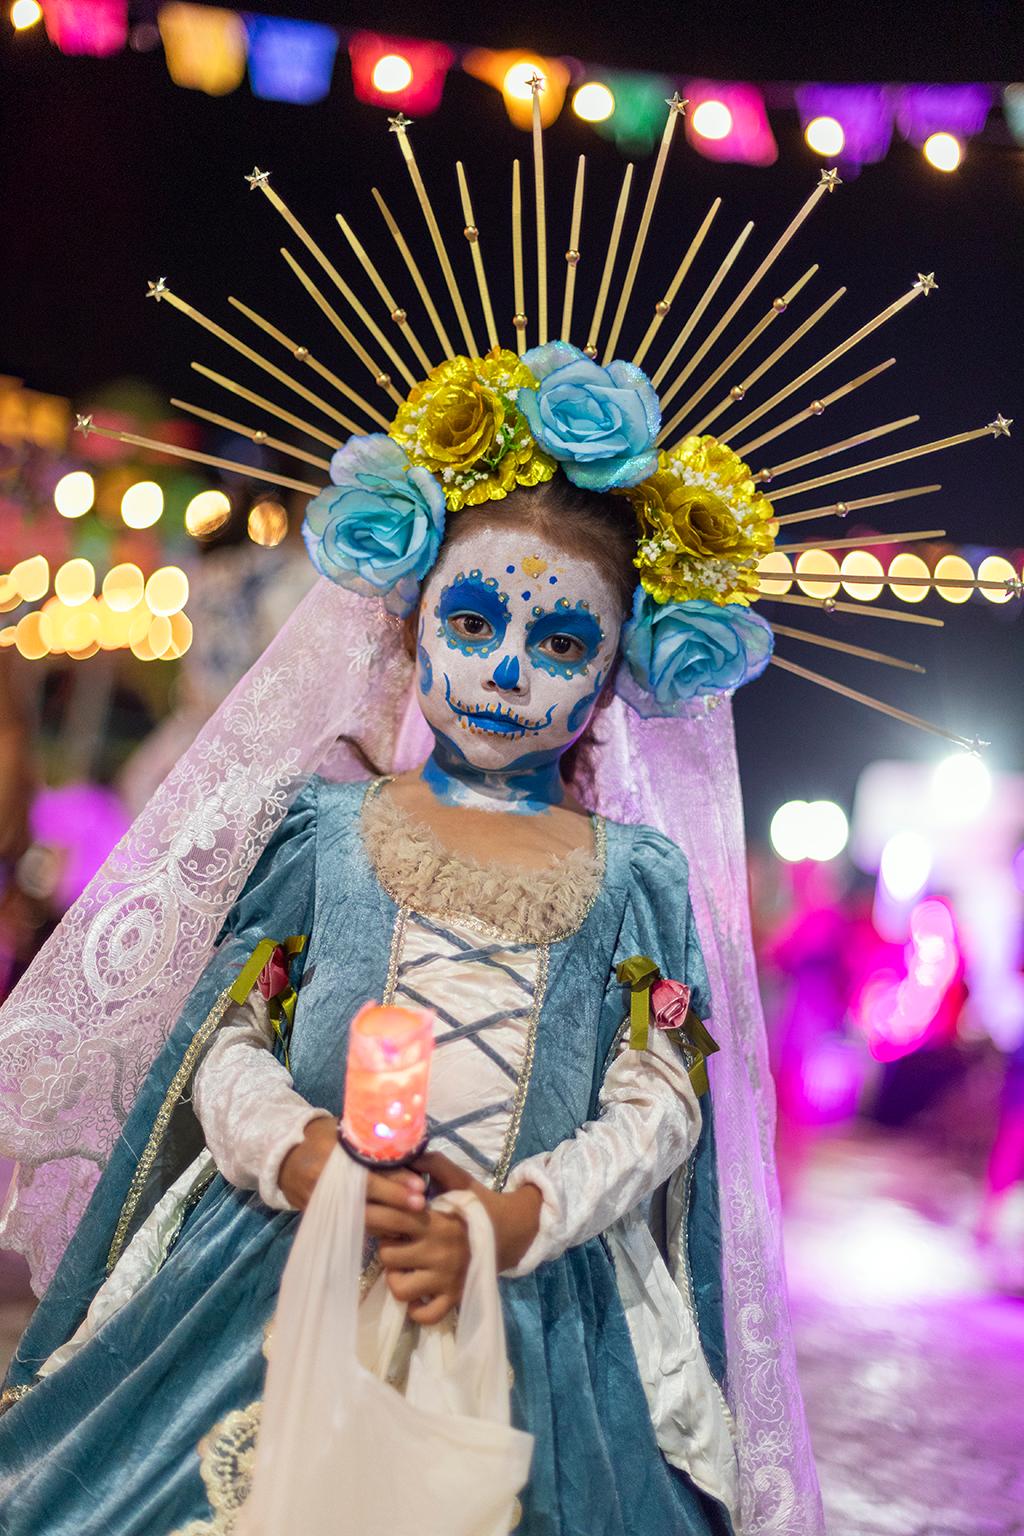  Cosmo Condina Portrait Photograph - Radiant girl, Day of the Dead,  Dia de los Muertos, Isla Mujeres, Mexico, 2023